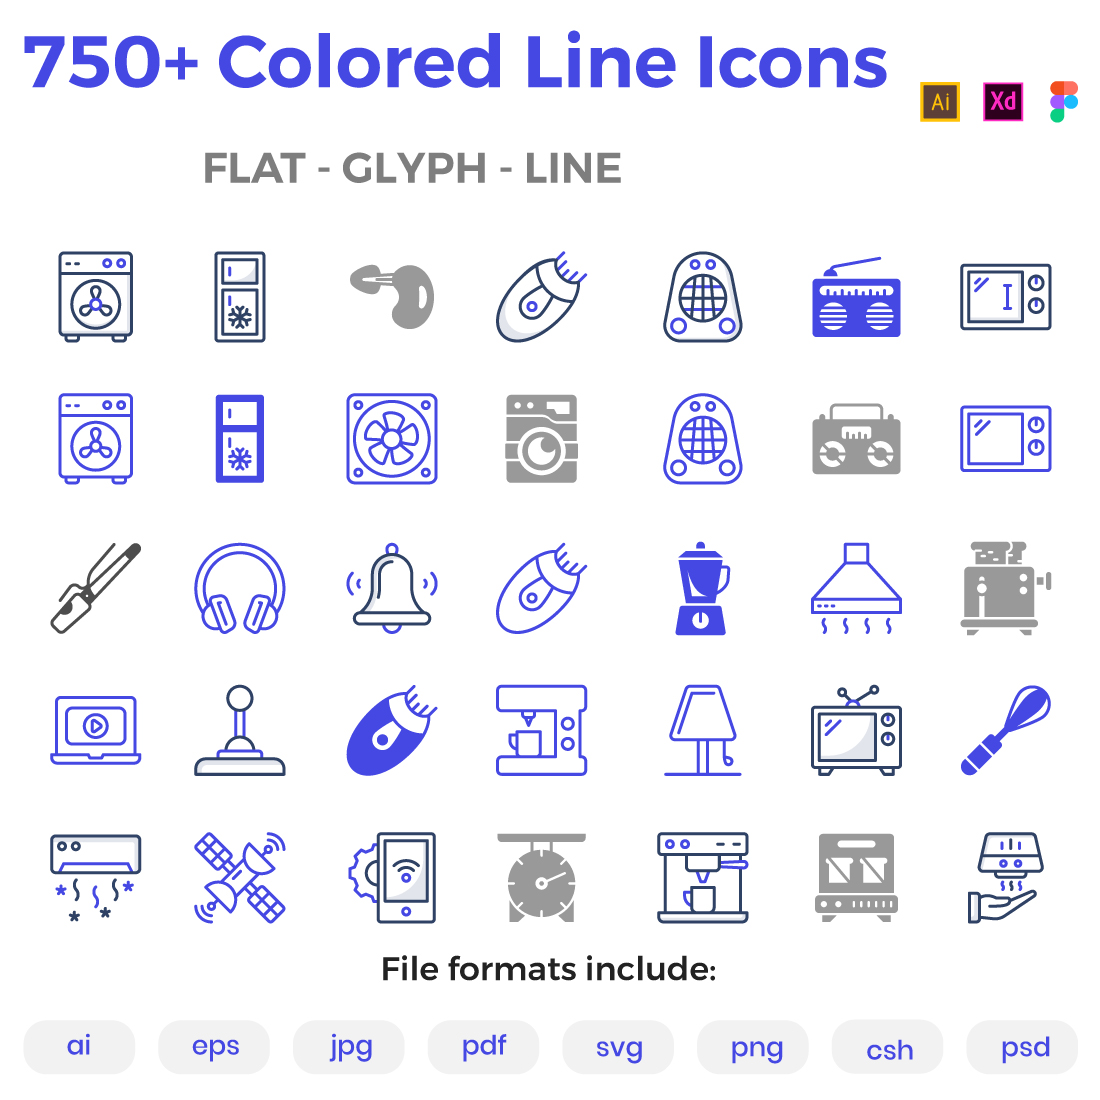 750+ Colored Line Icon cover image.